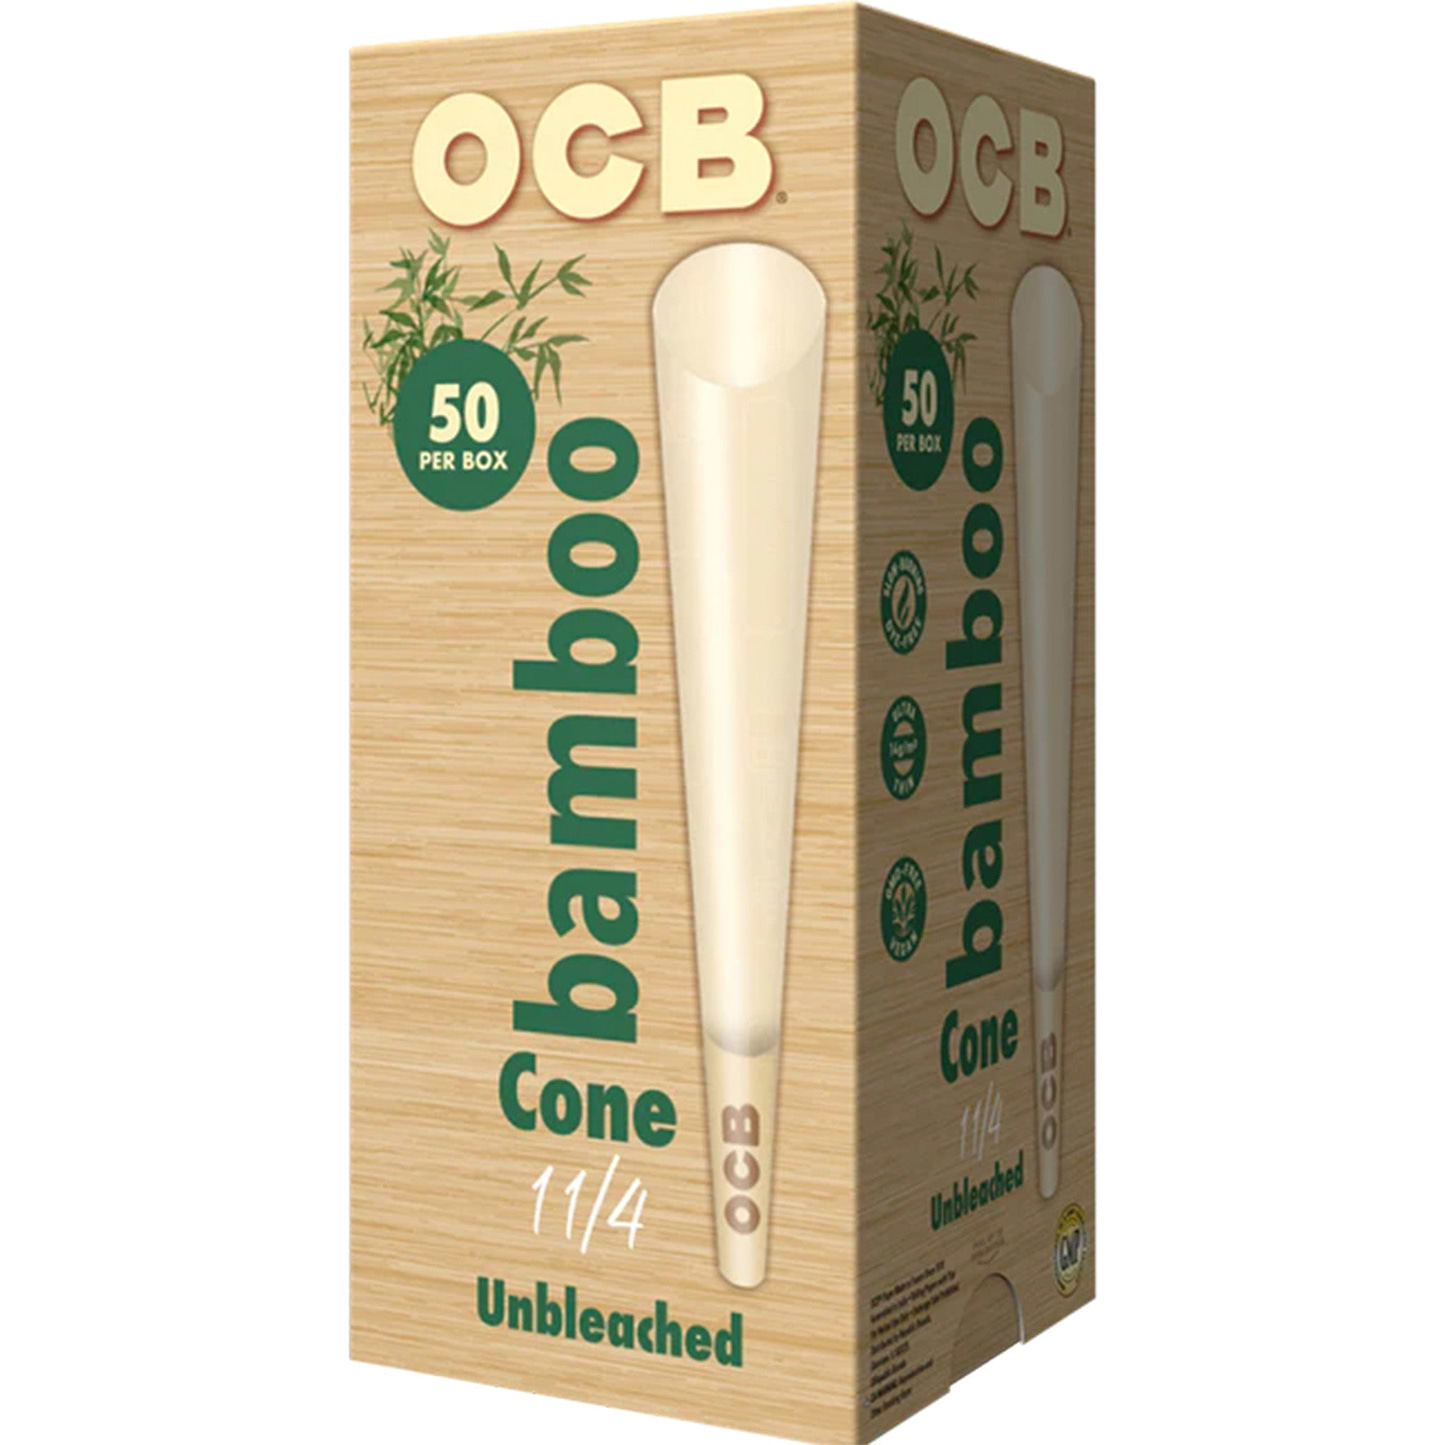 OCB Bamboo 1 1/4 Cone Box 50